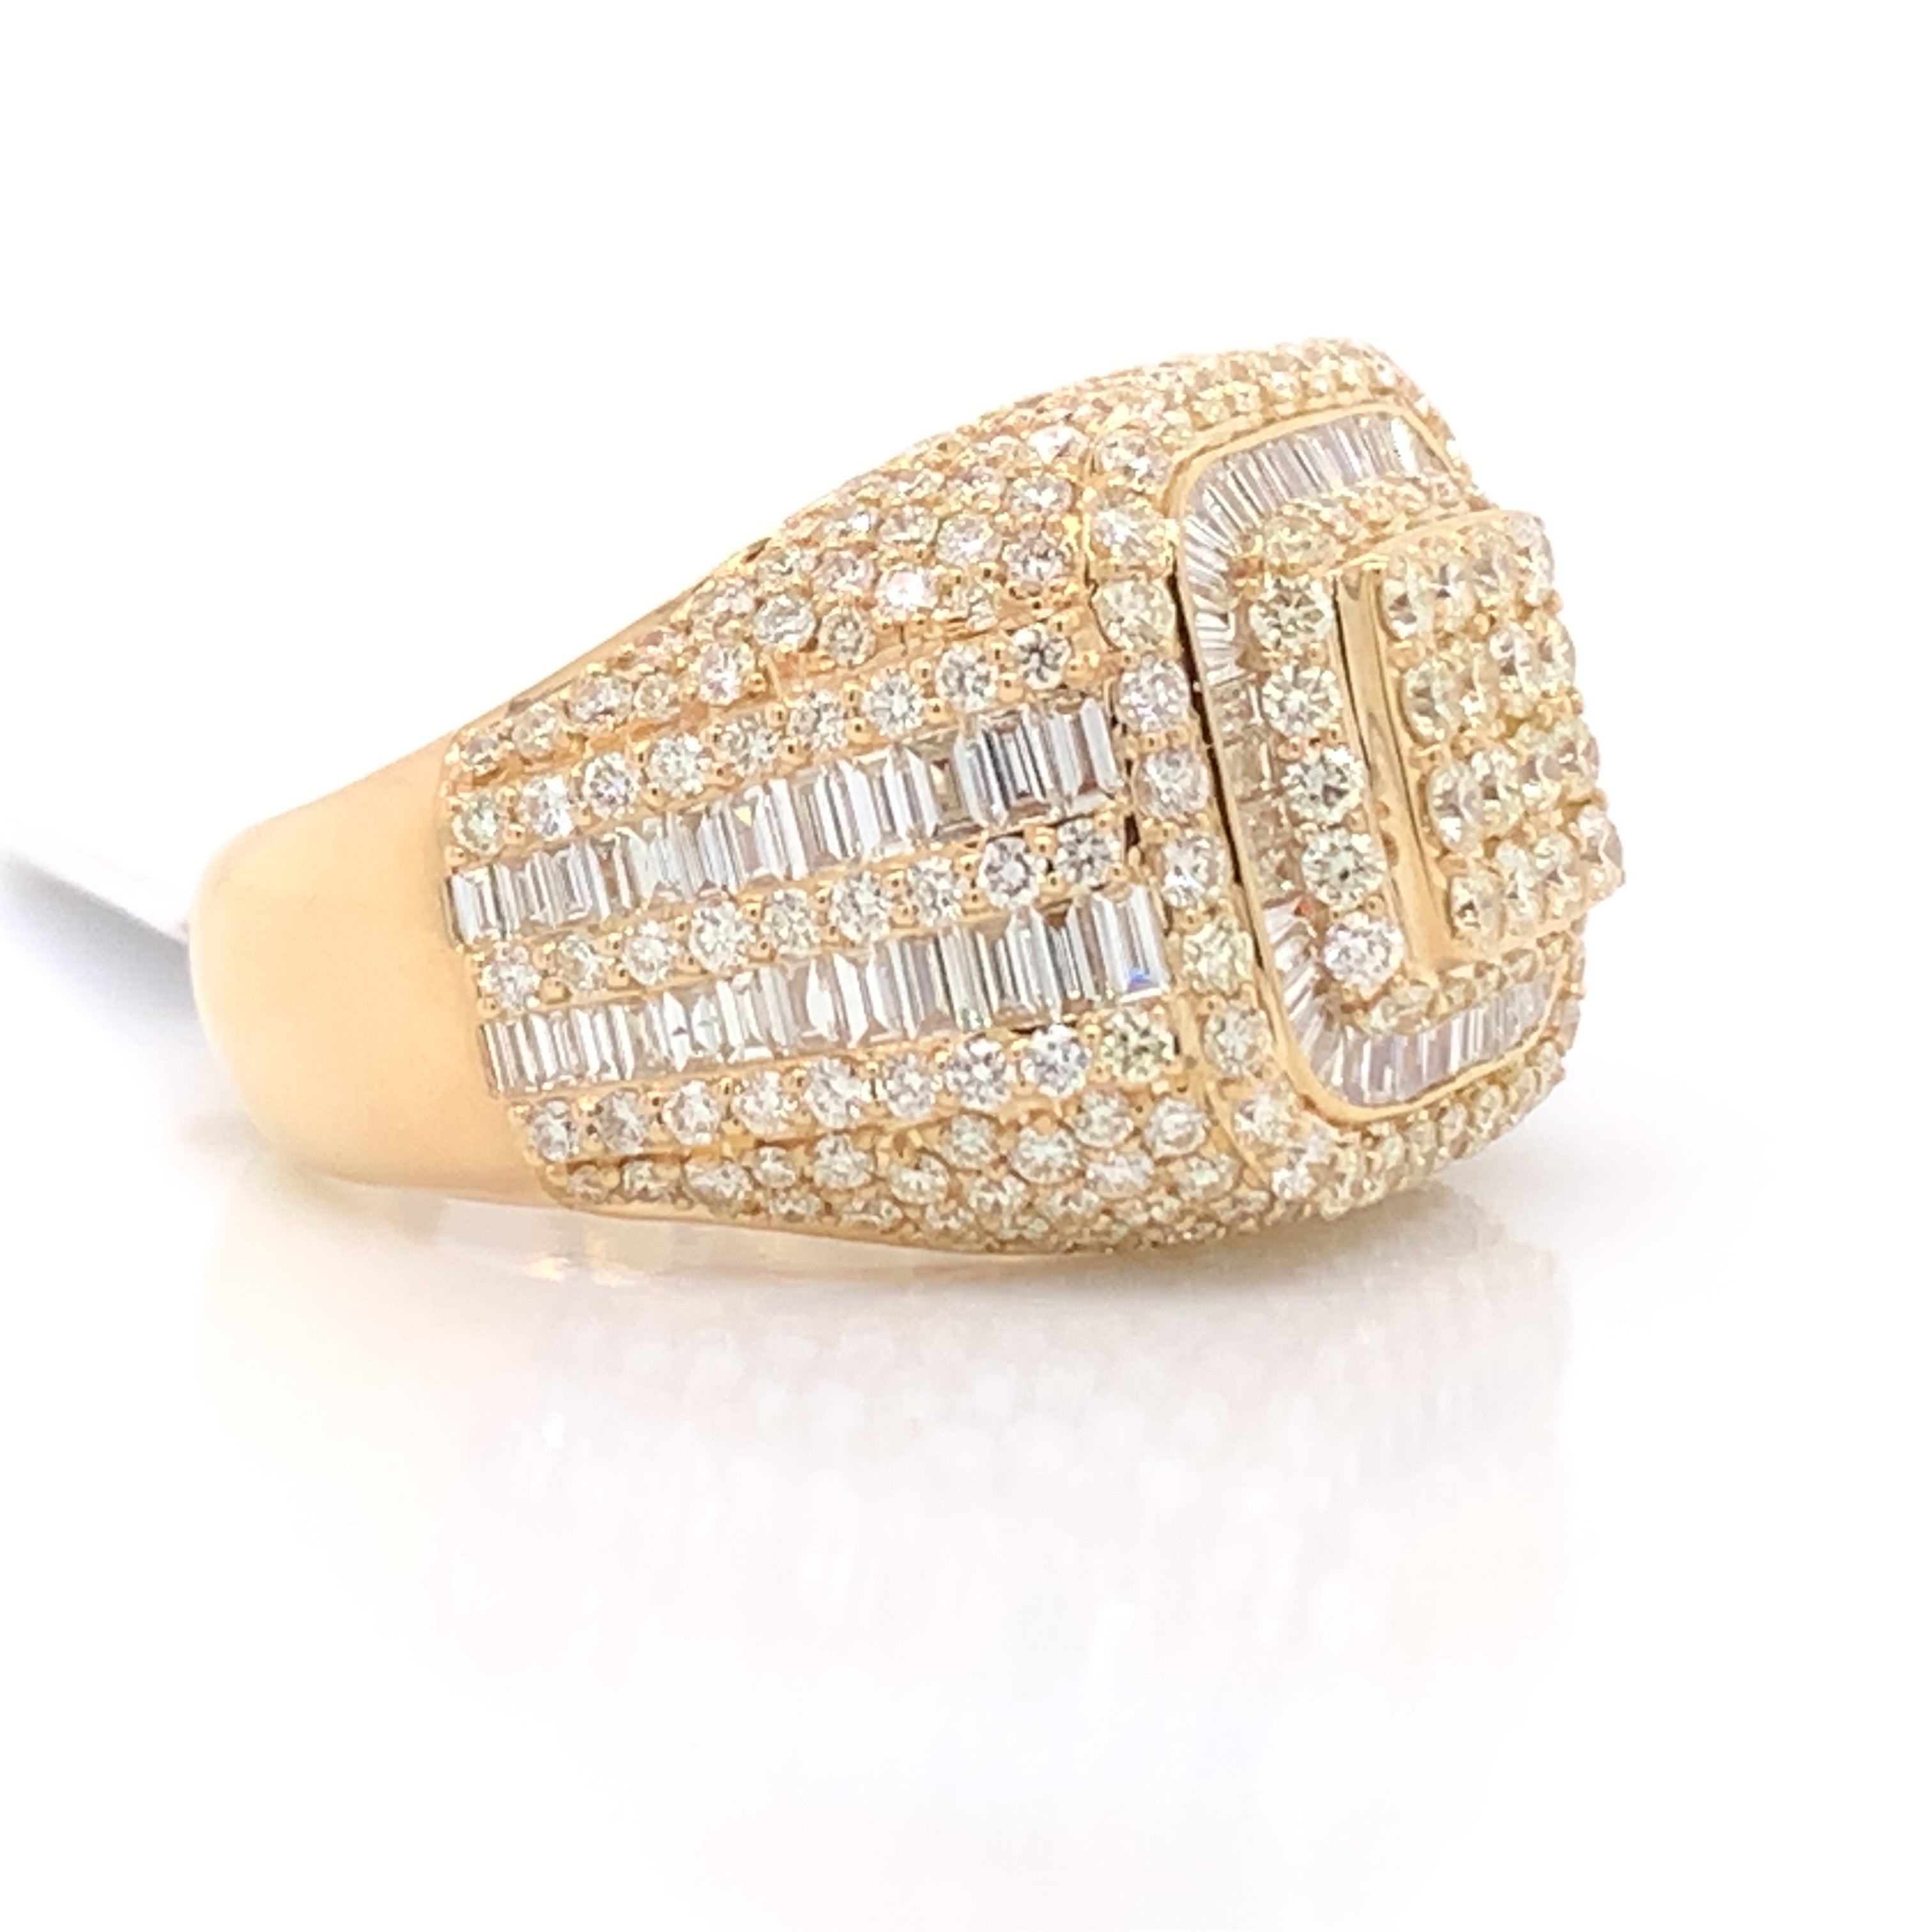 6.75 CT. Diamond Ring 10KT Gold - White Carat Diamonds 